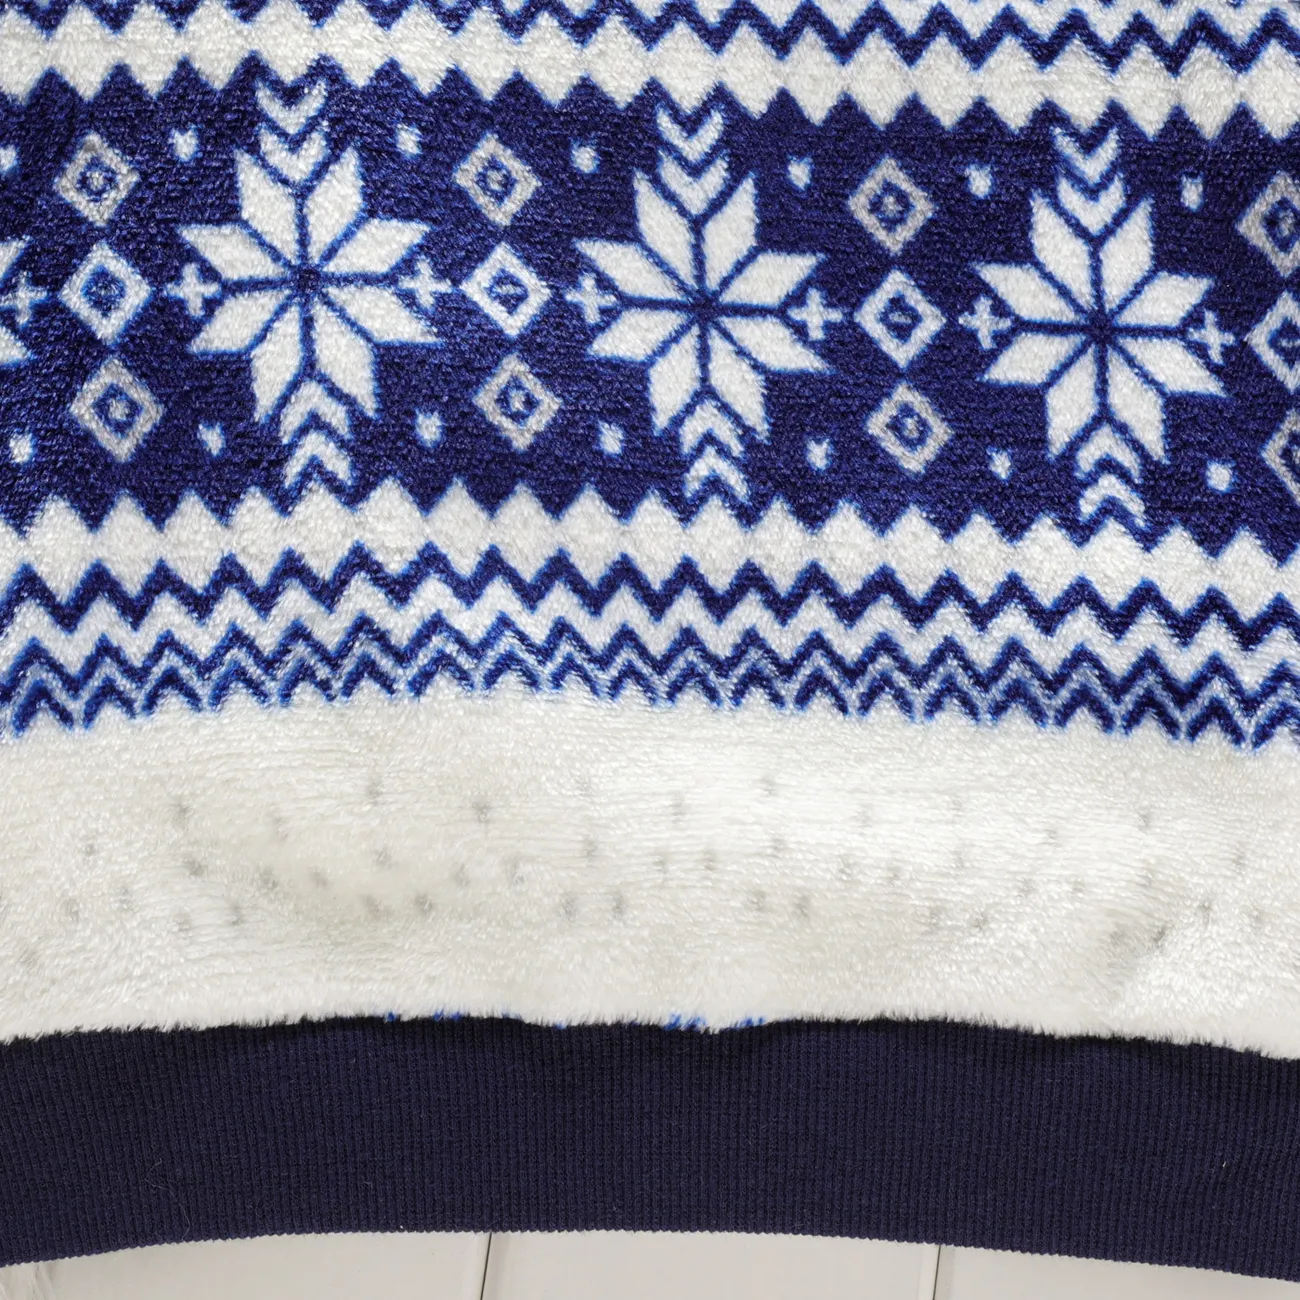 Toddler Boy/Girl Preppy style Snowflake Pattern Fleece Pullover Sweatshirt blueblack big image 1